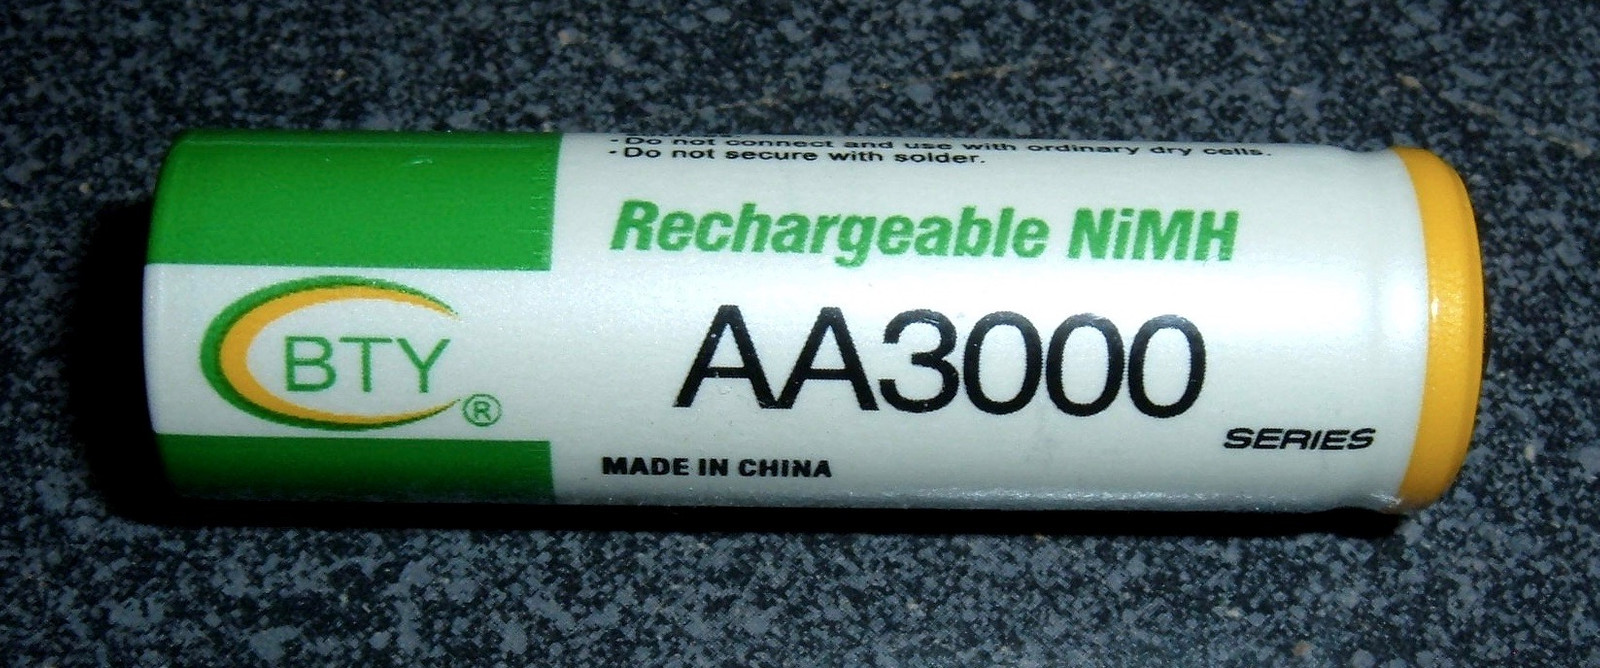 Pack de 2 pilas recargables C NiMH 3000 mAh